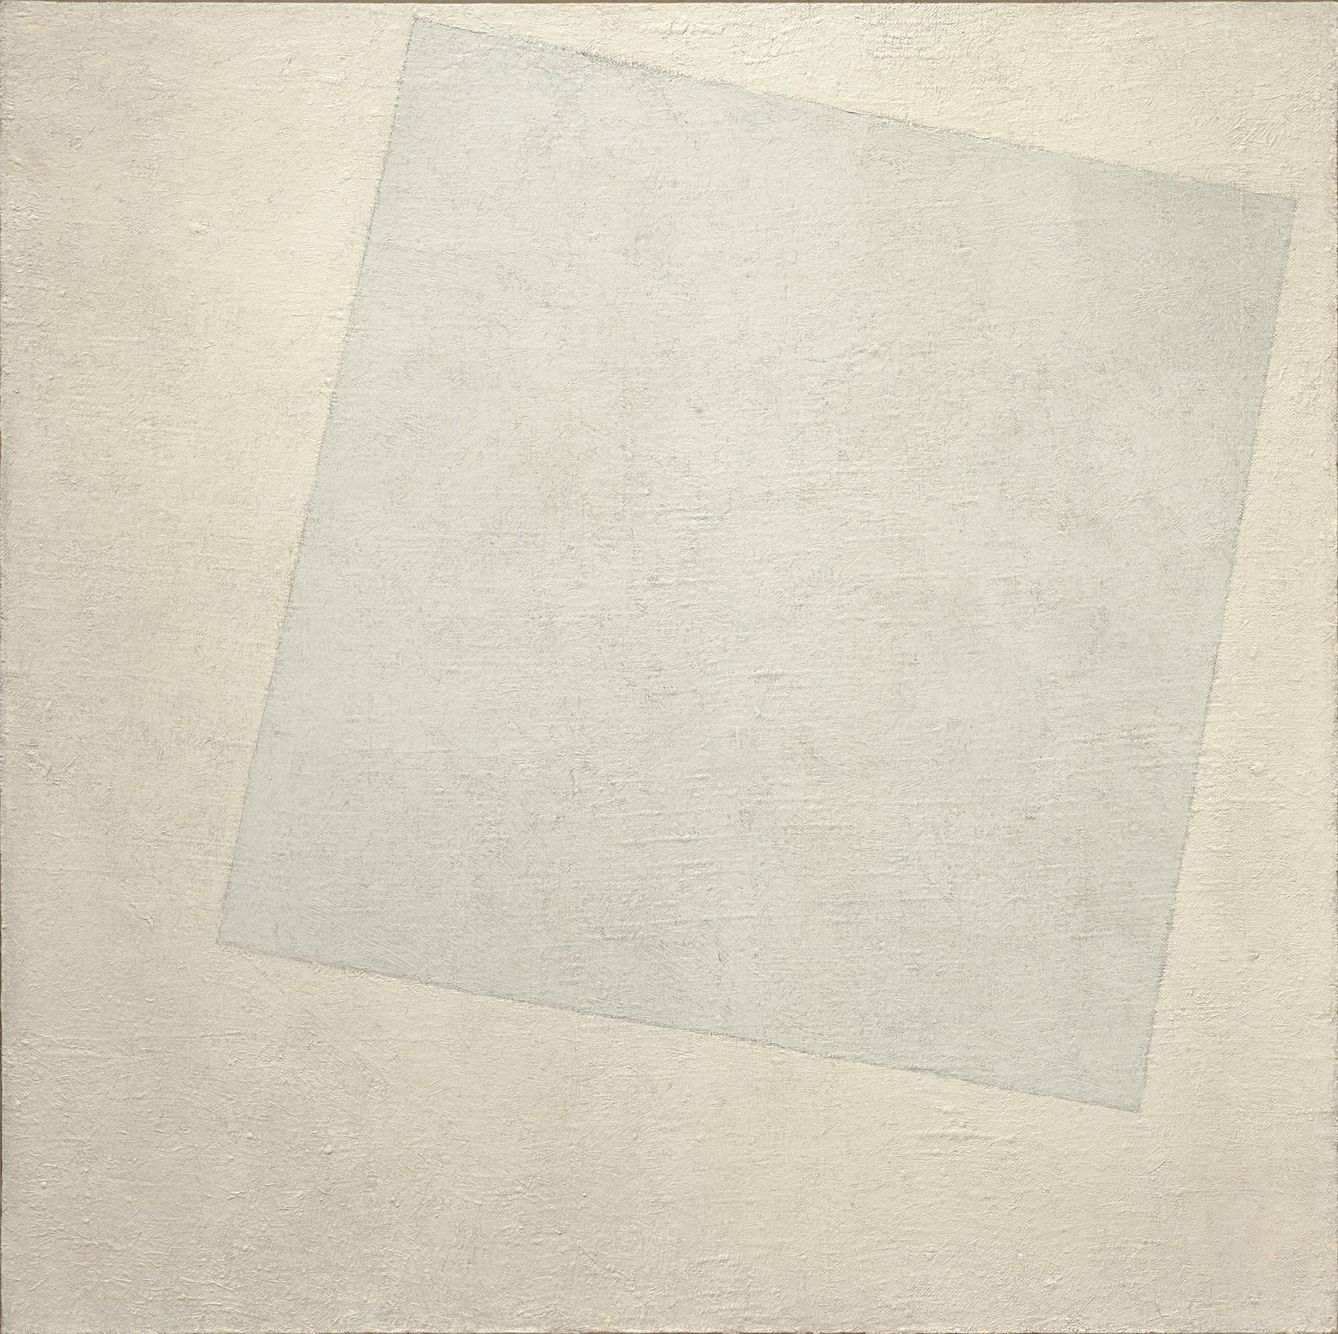 Malevich, 'Cuadrado blanco sobre fondo blanco' (1918).